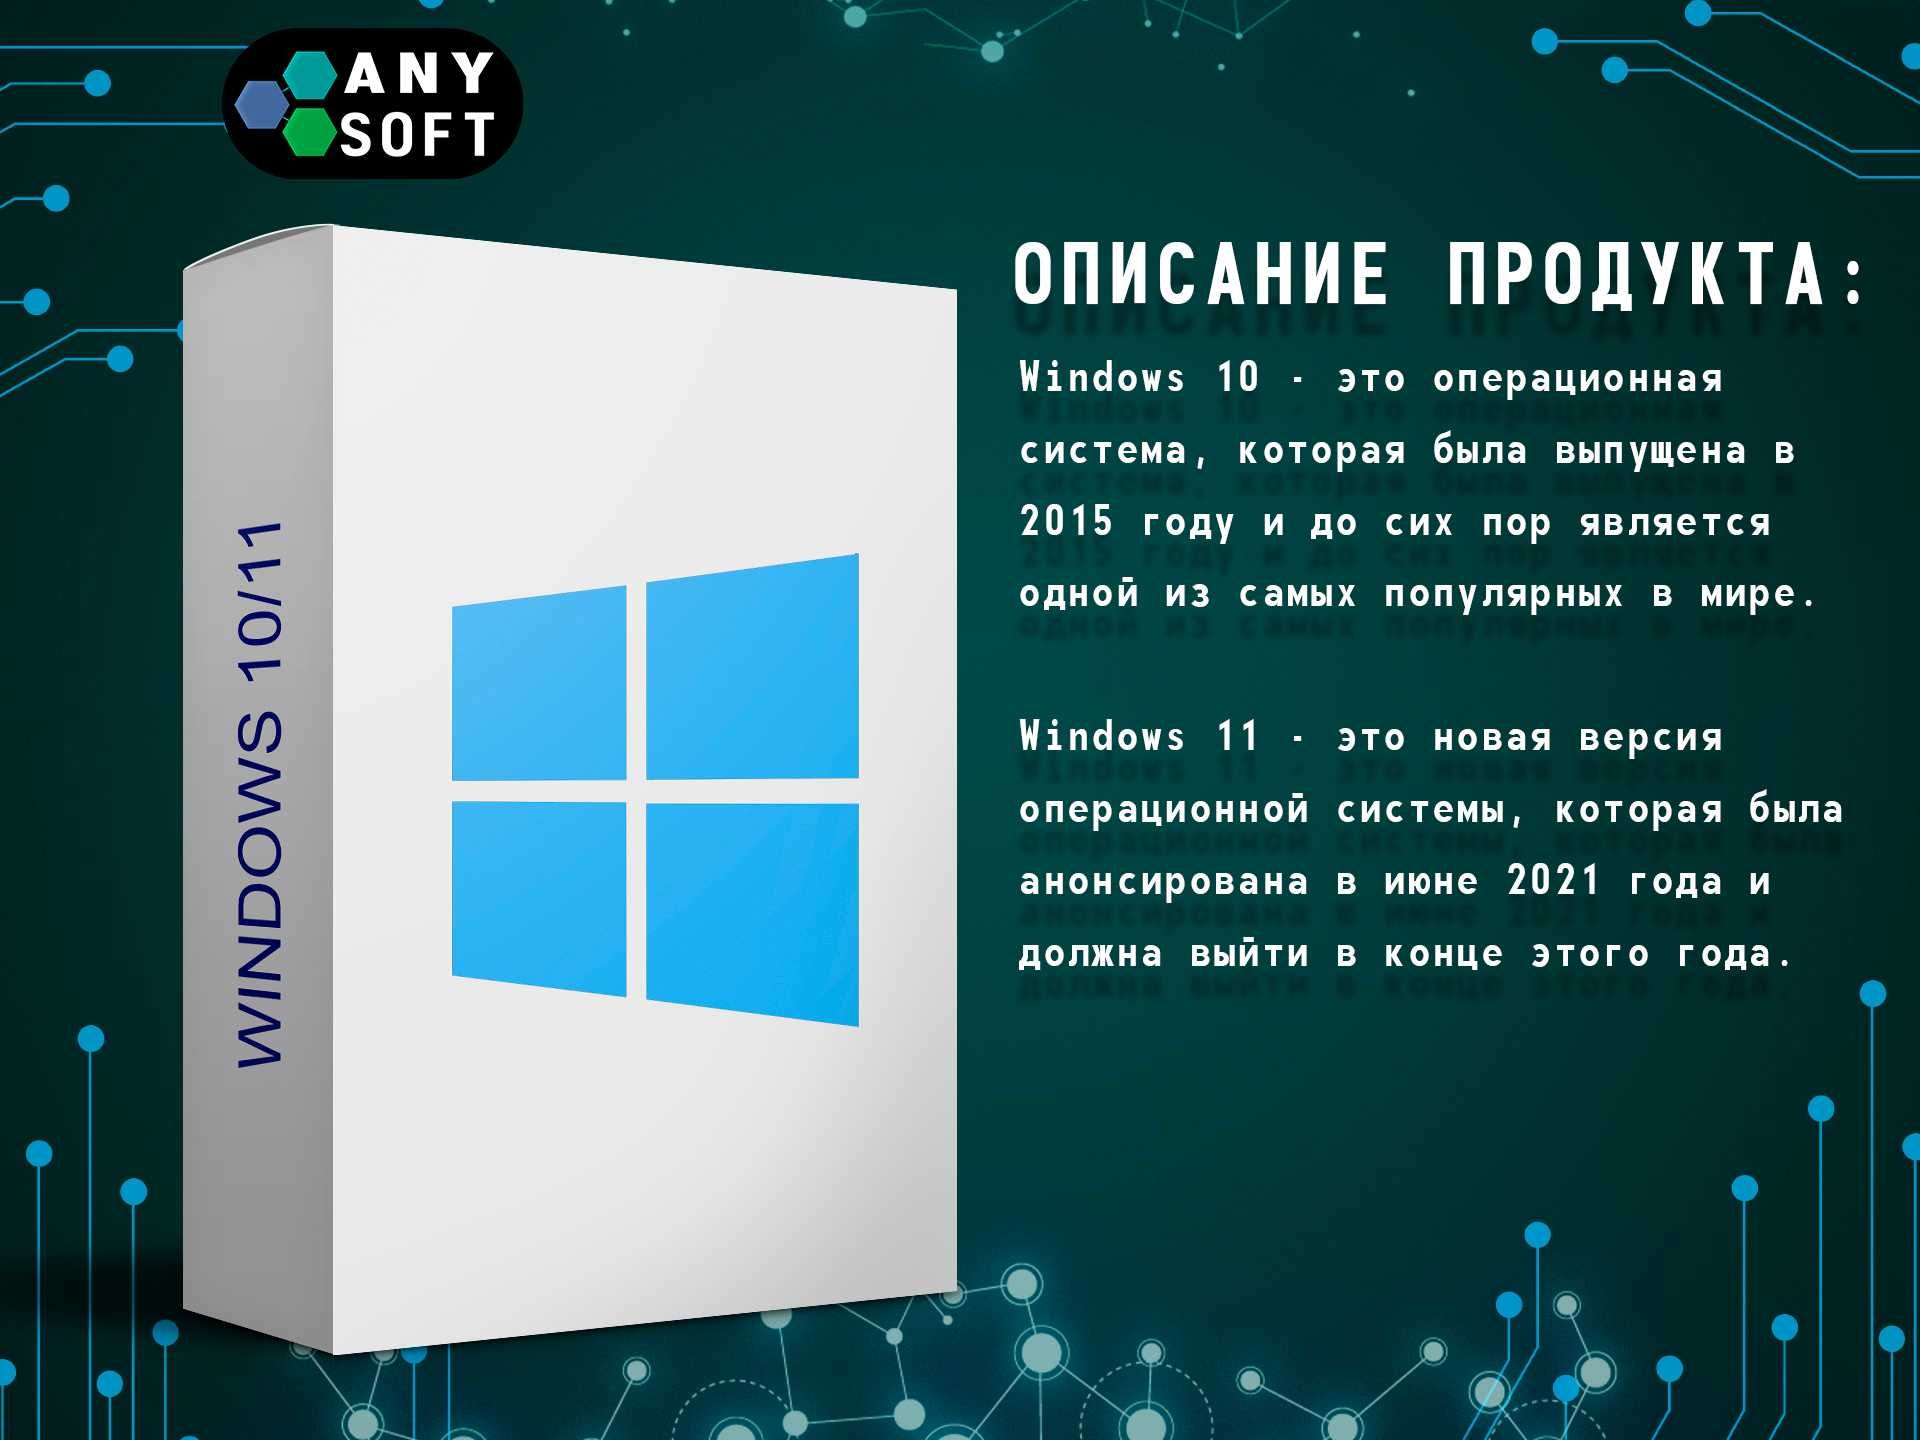 Windows 10 / 11 pro, enterprise, home Ключ активации